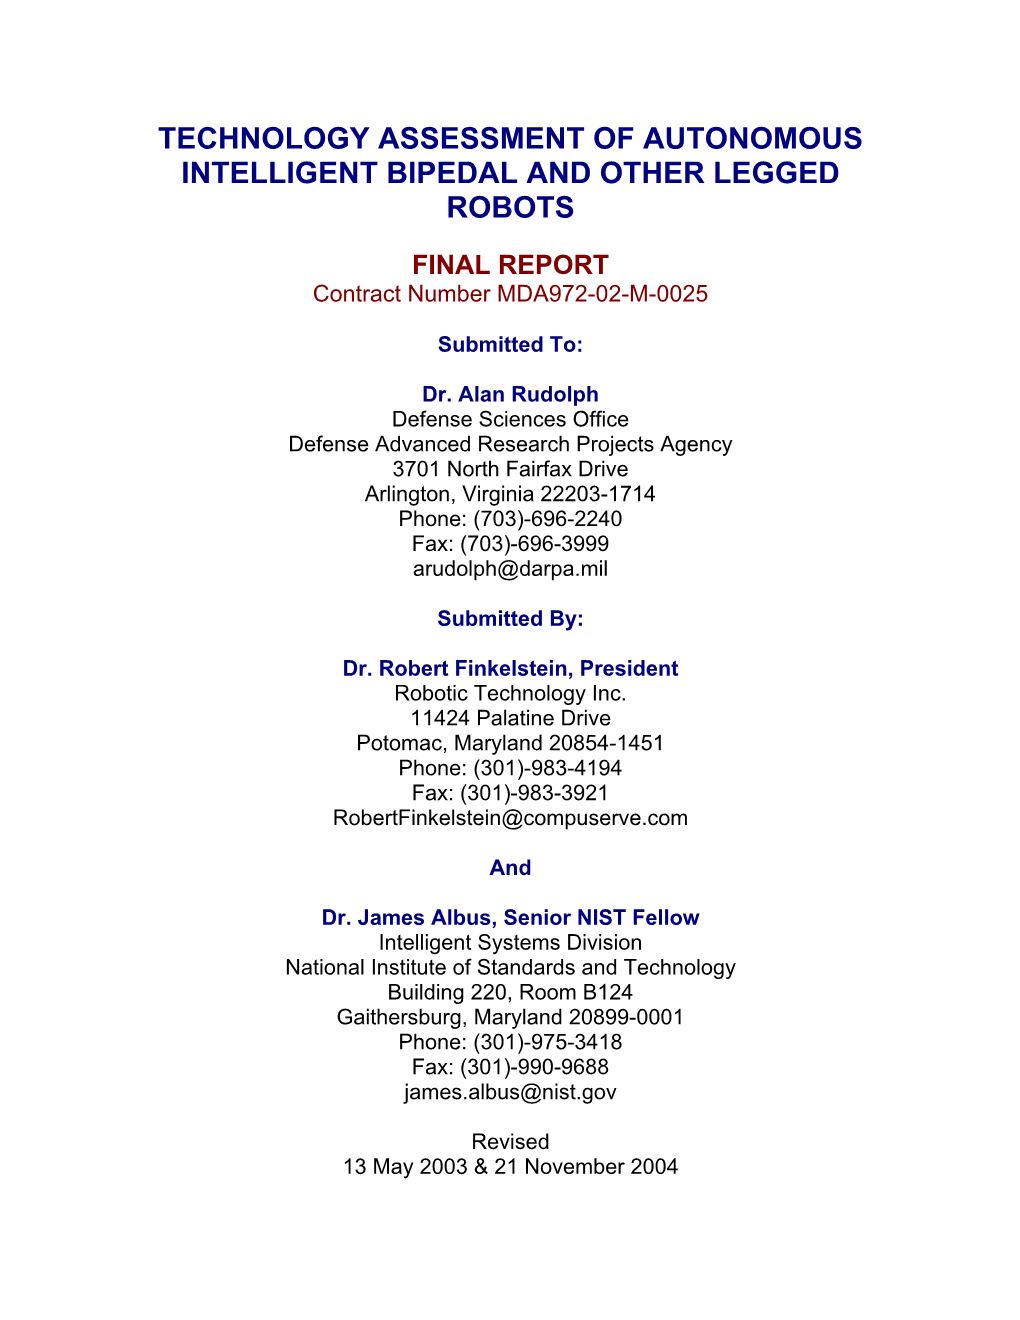 Technology Assessment of Autonomous Intelligent Bipedal and Other Legged Robots